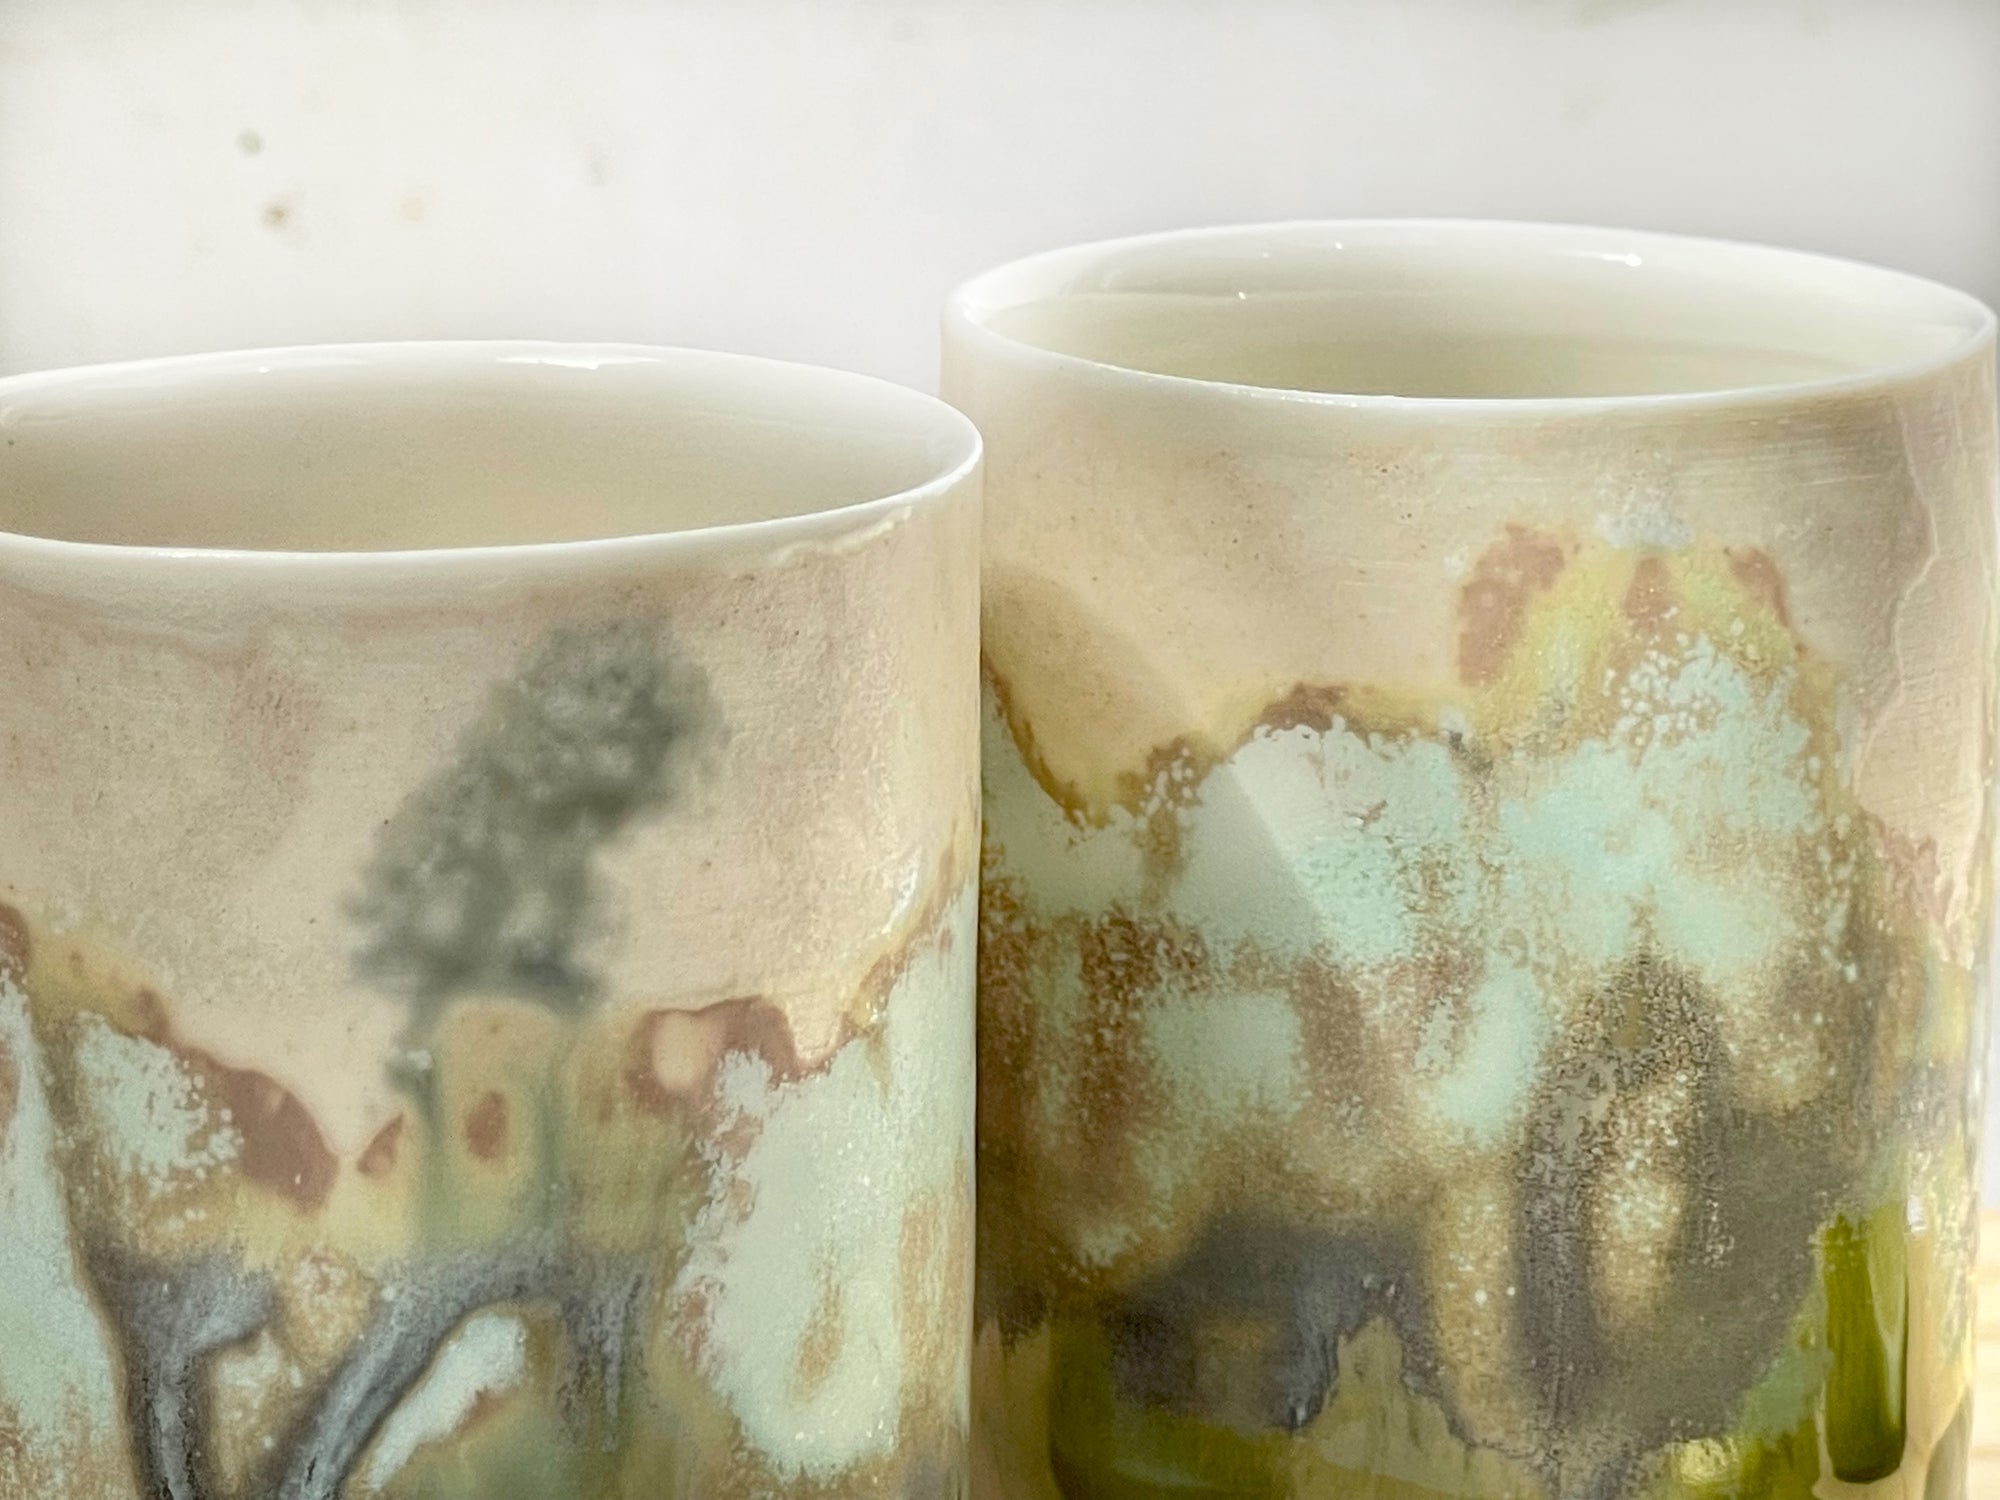 Pair of porcelain shot glasses, Iona Ceramics